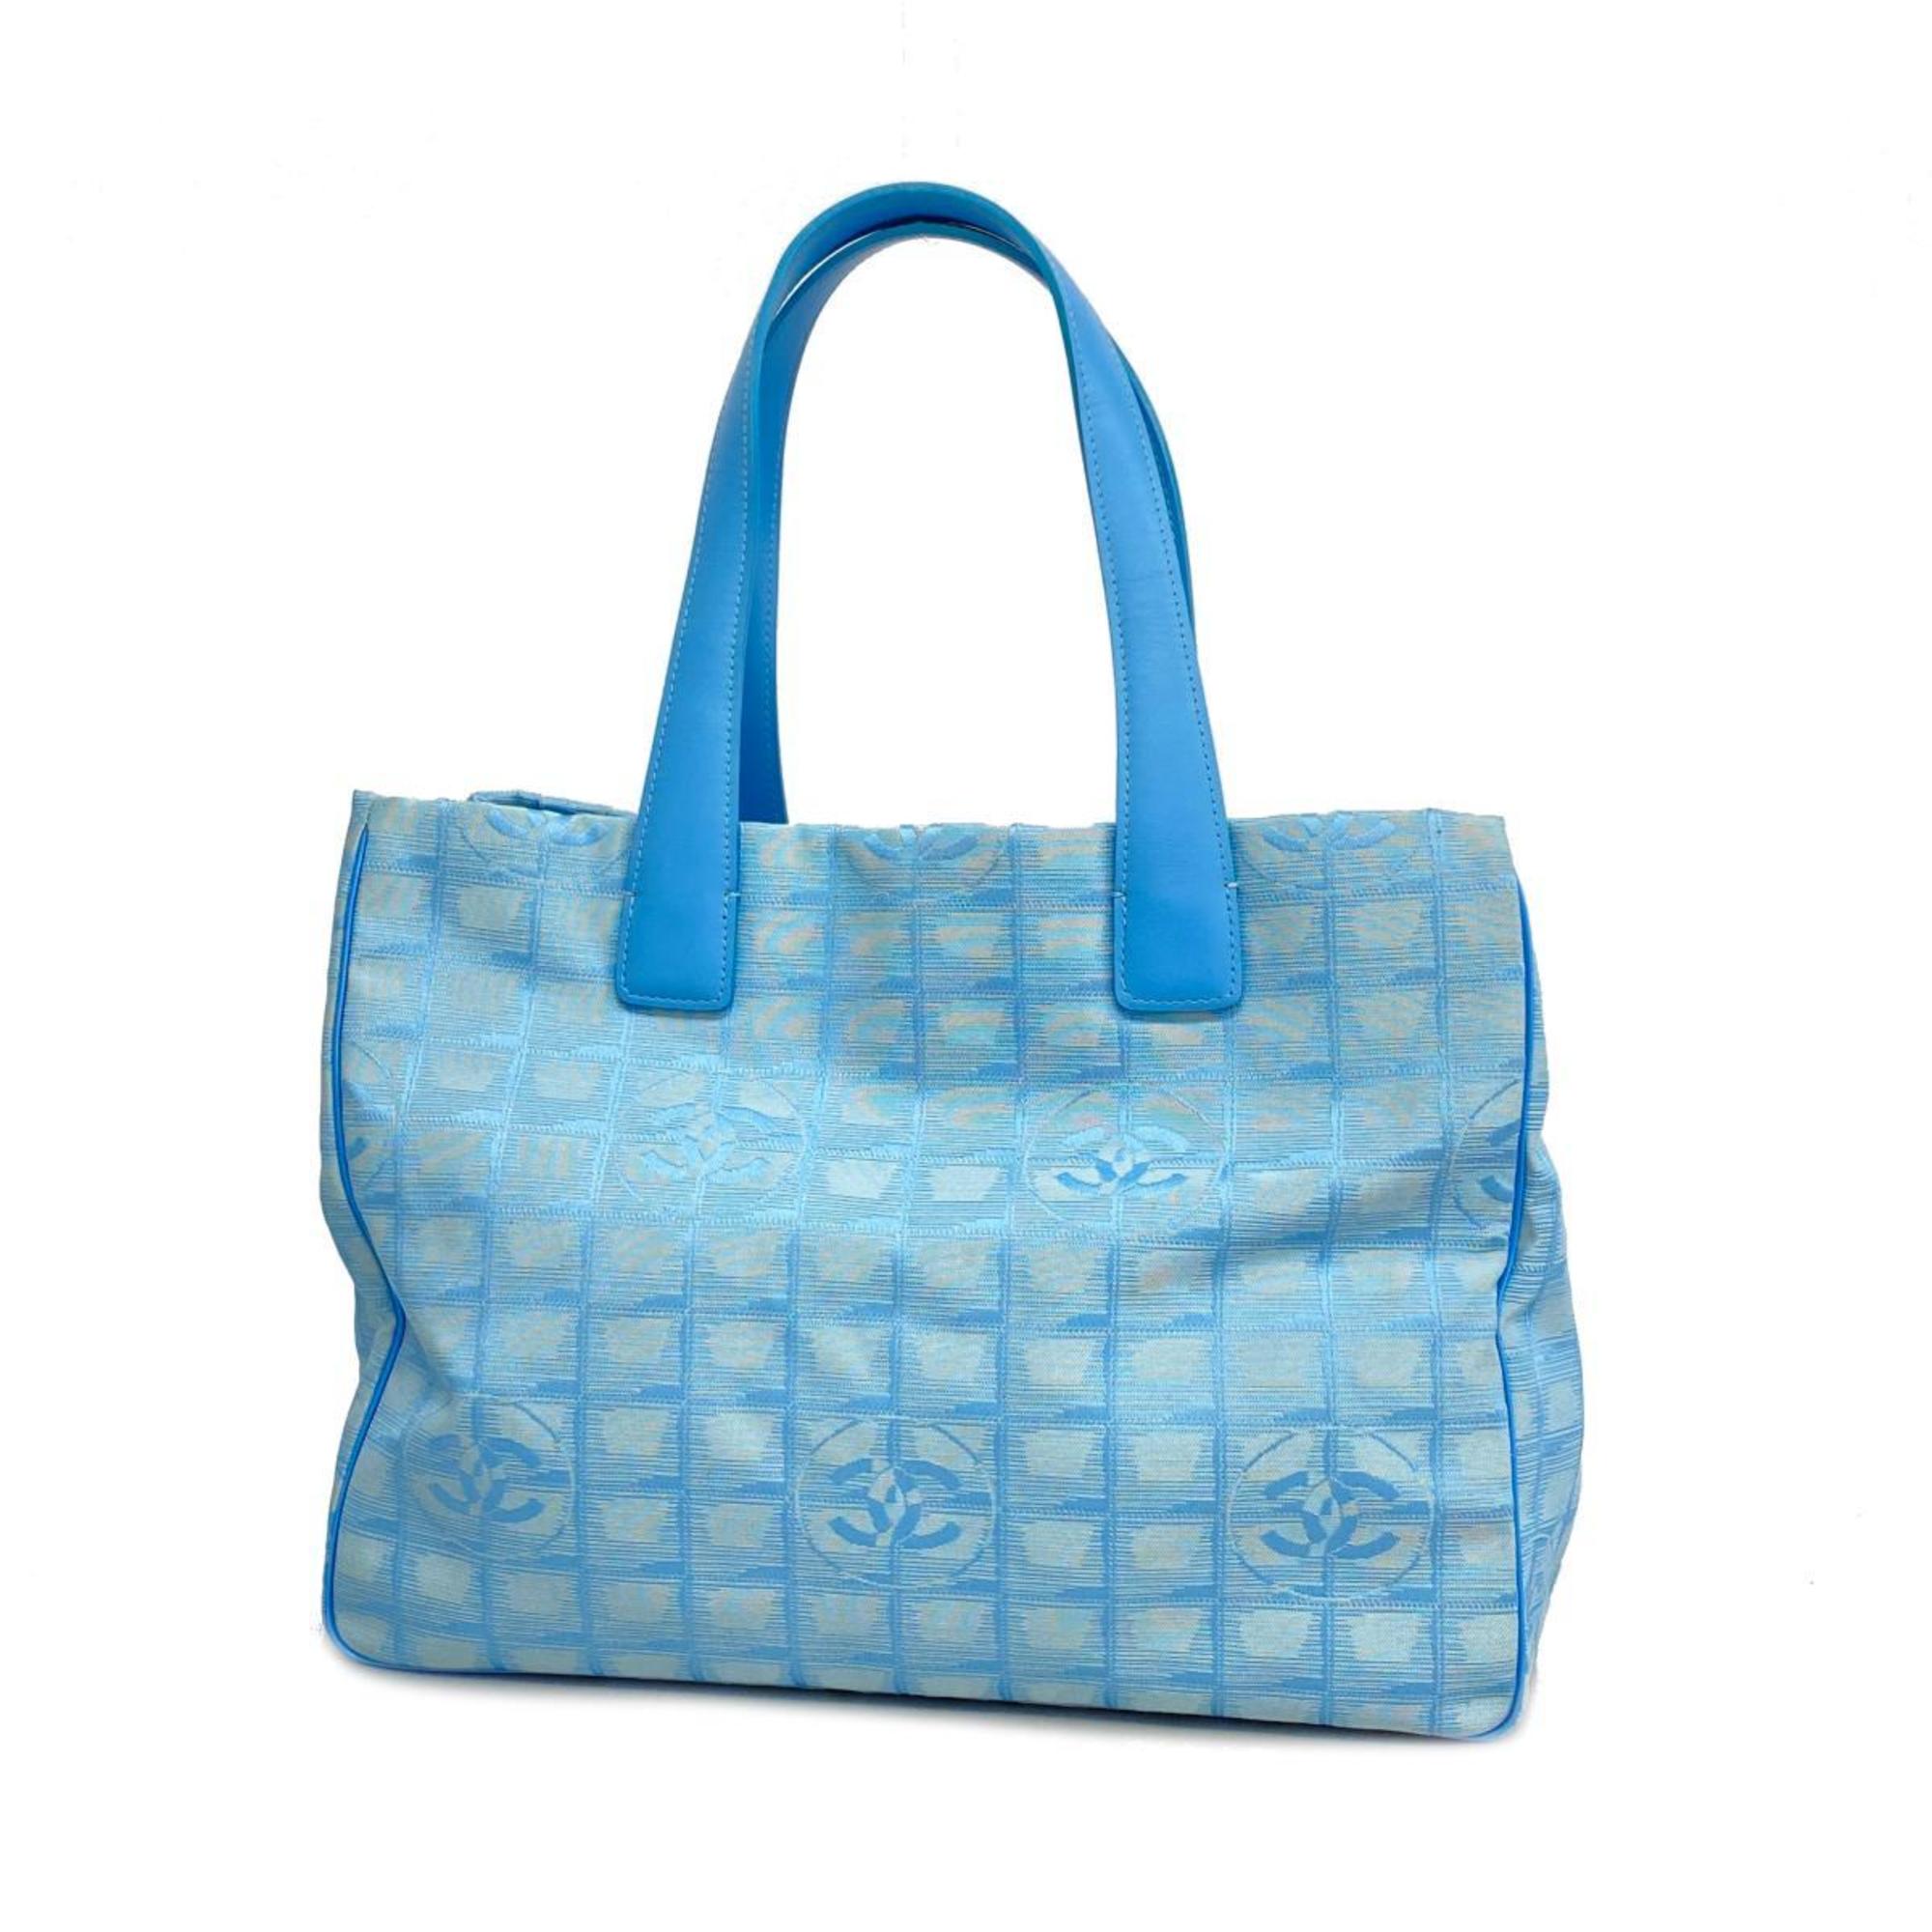 Chanel Tote Bag New Travel Nylon Blue Women's